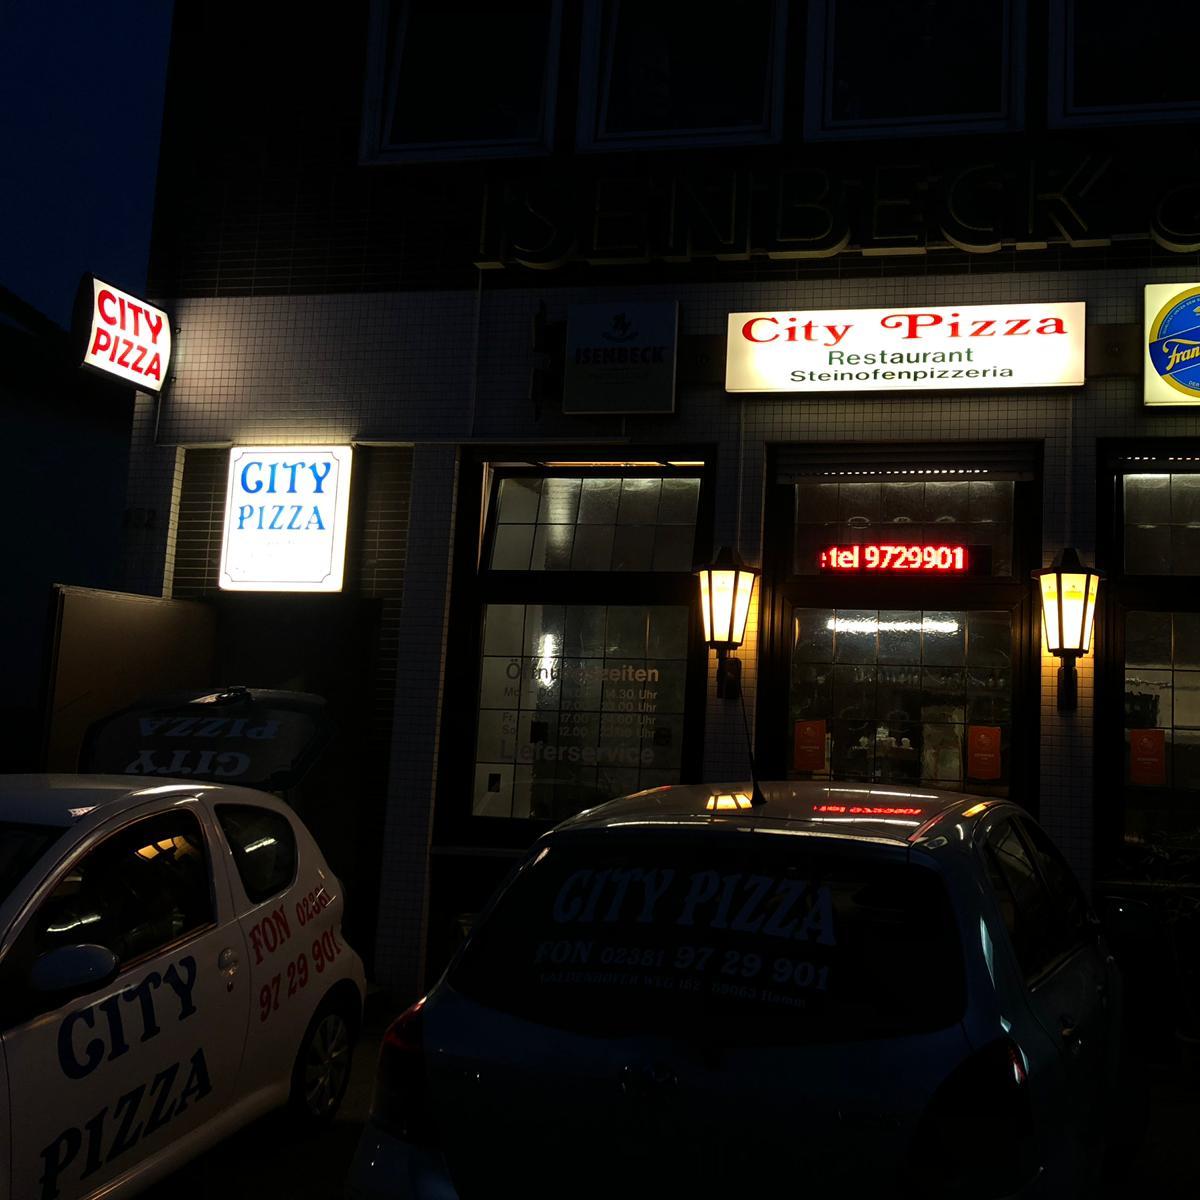 Restaurant "City Pizza" in Hamm